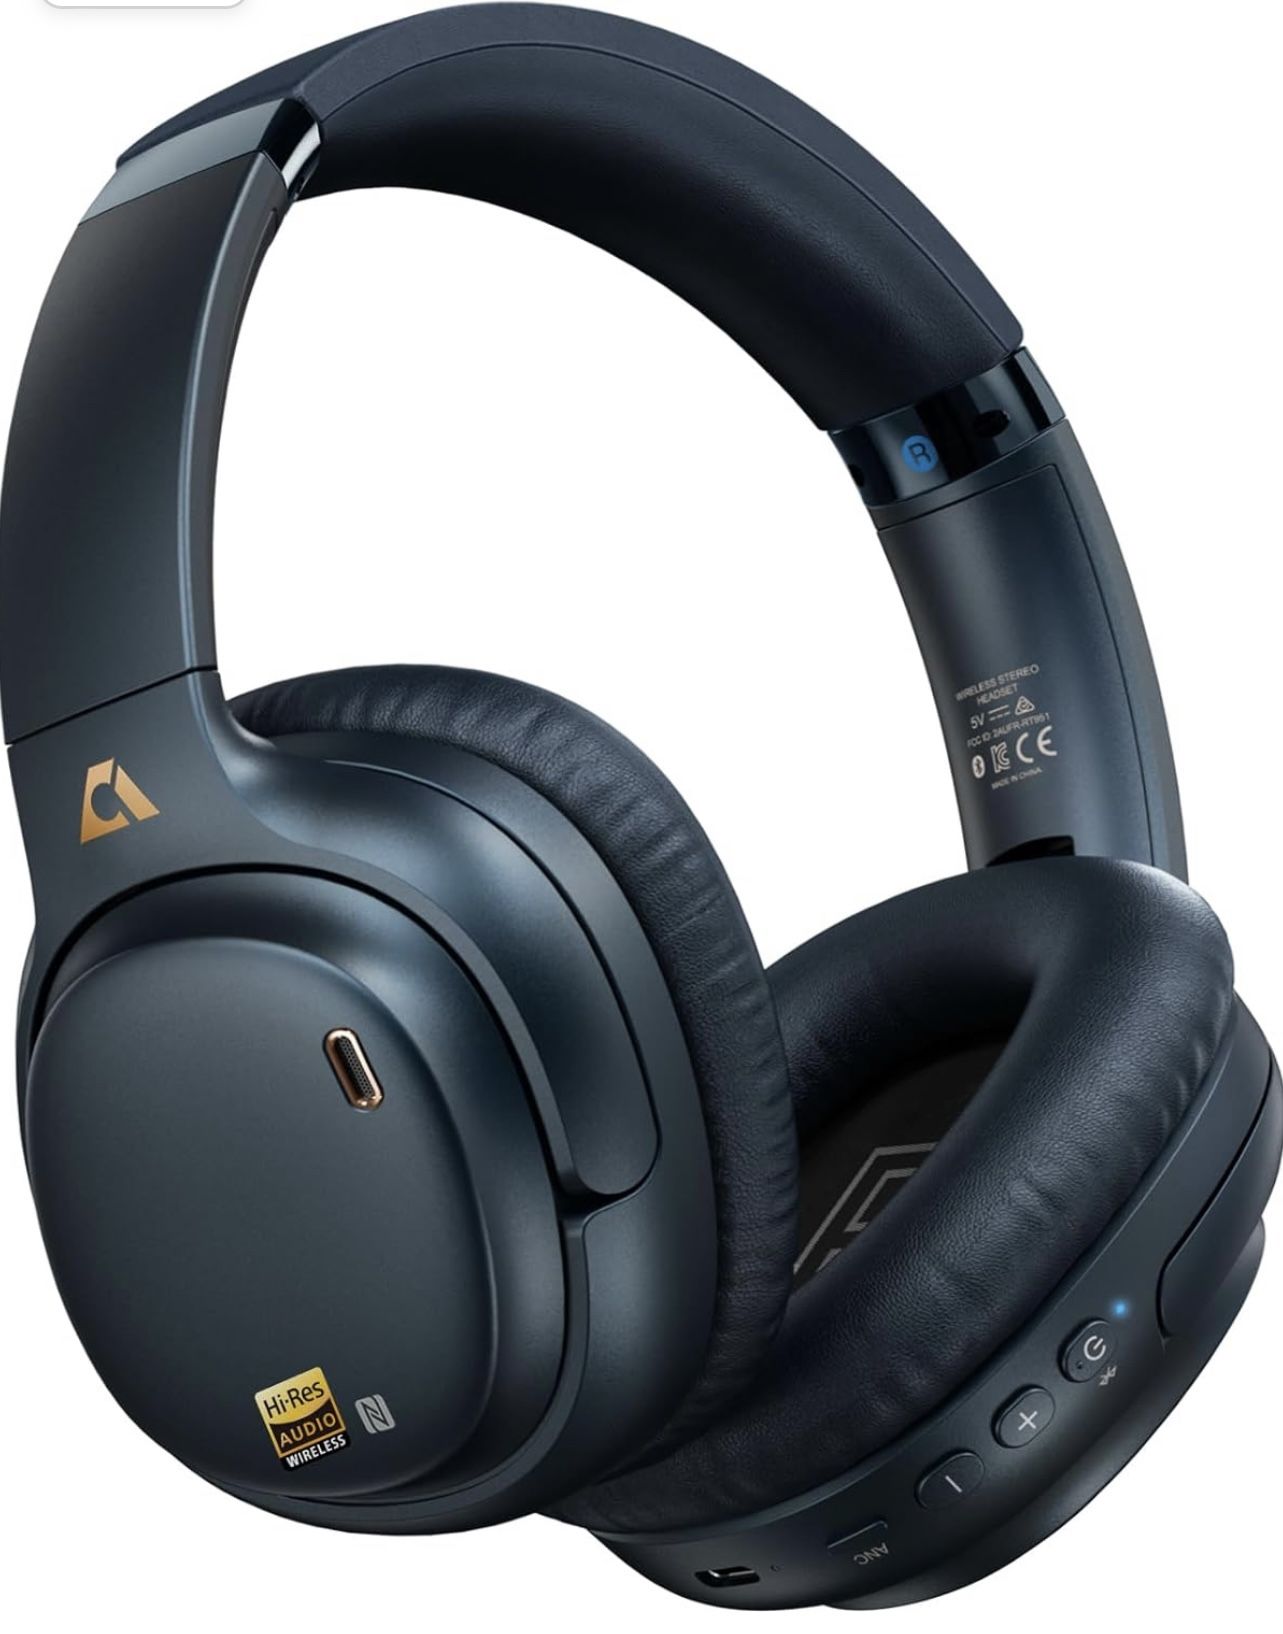 New Ankbit E700 Wireless Noise Cancelling Stereo Headphones